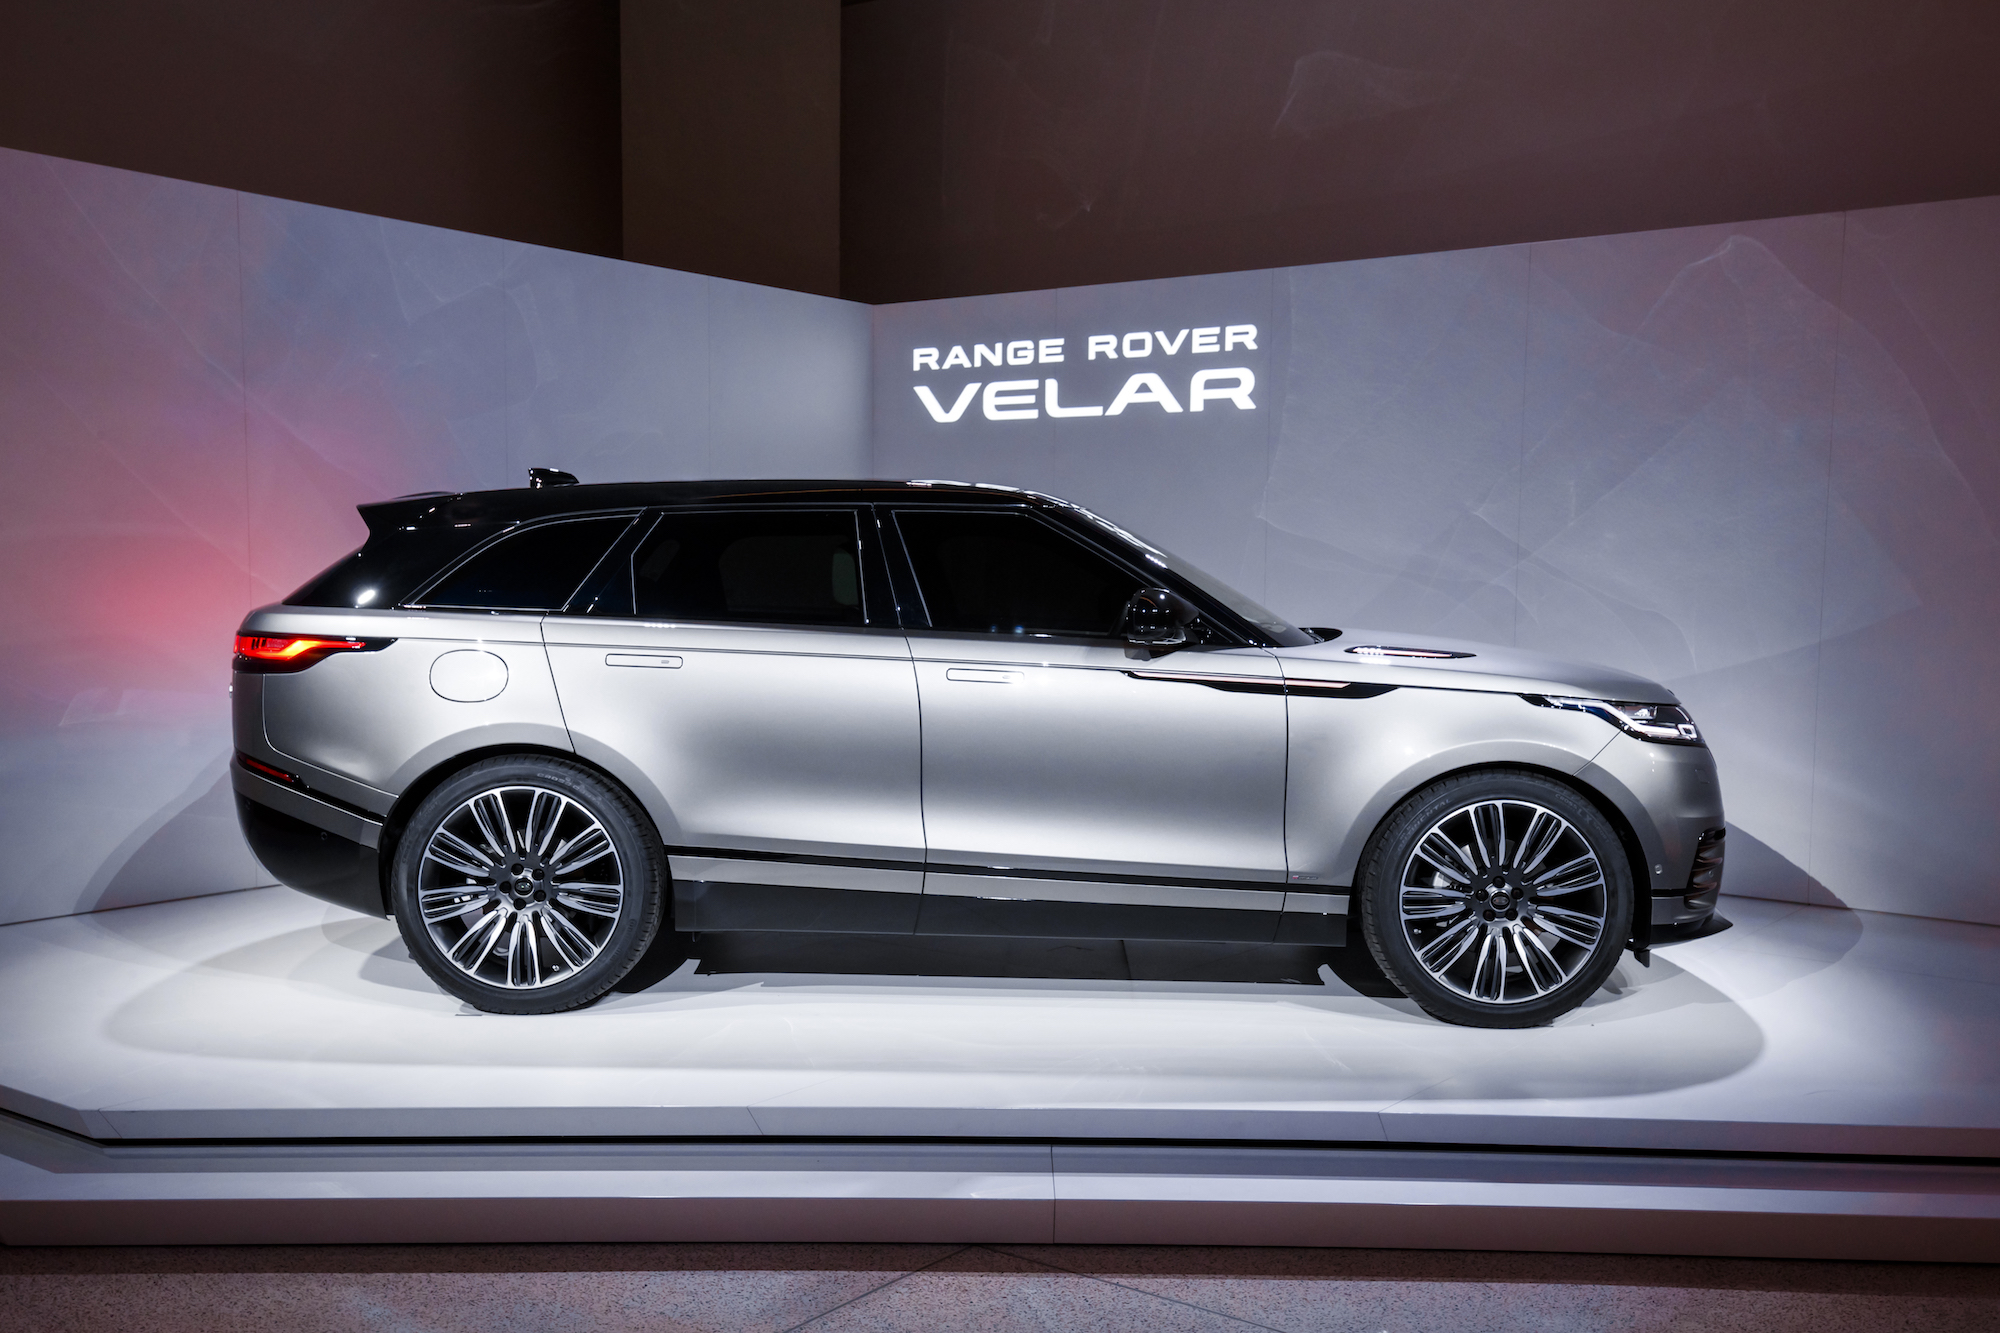 Jest pięknie. Range Rover z nowym modelem Velar Lifestyle mediarun range rover velar 8